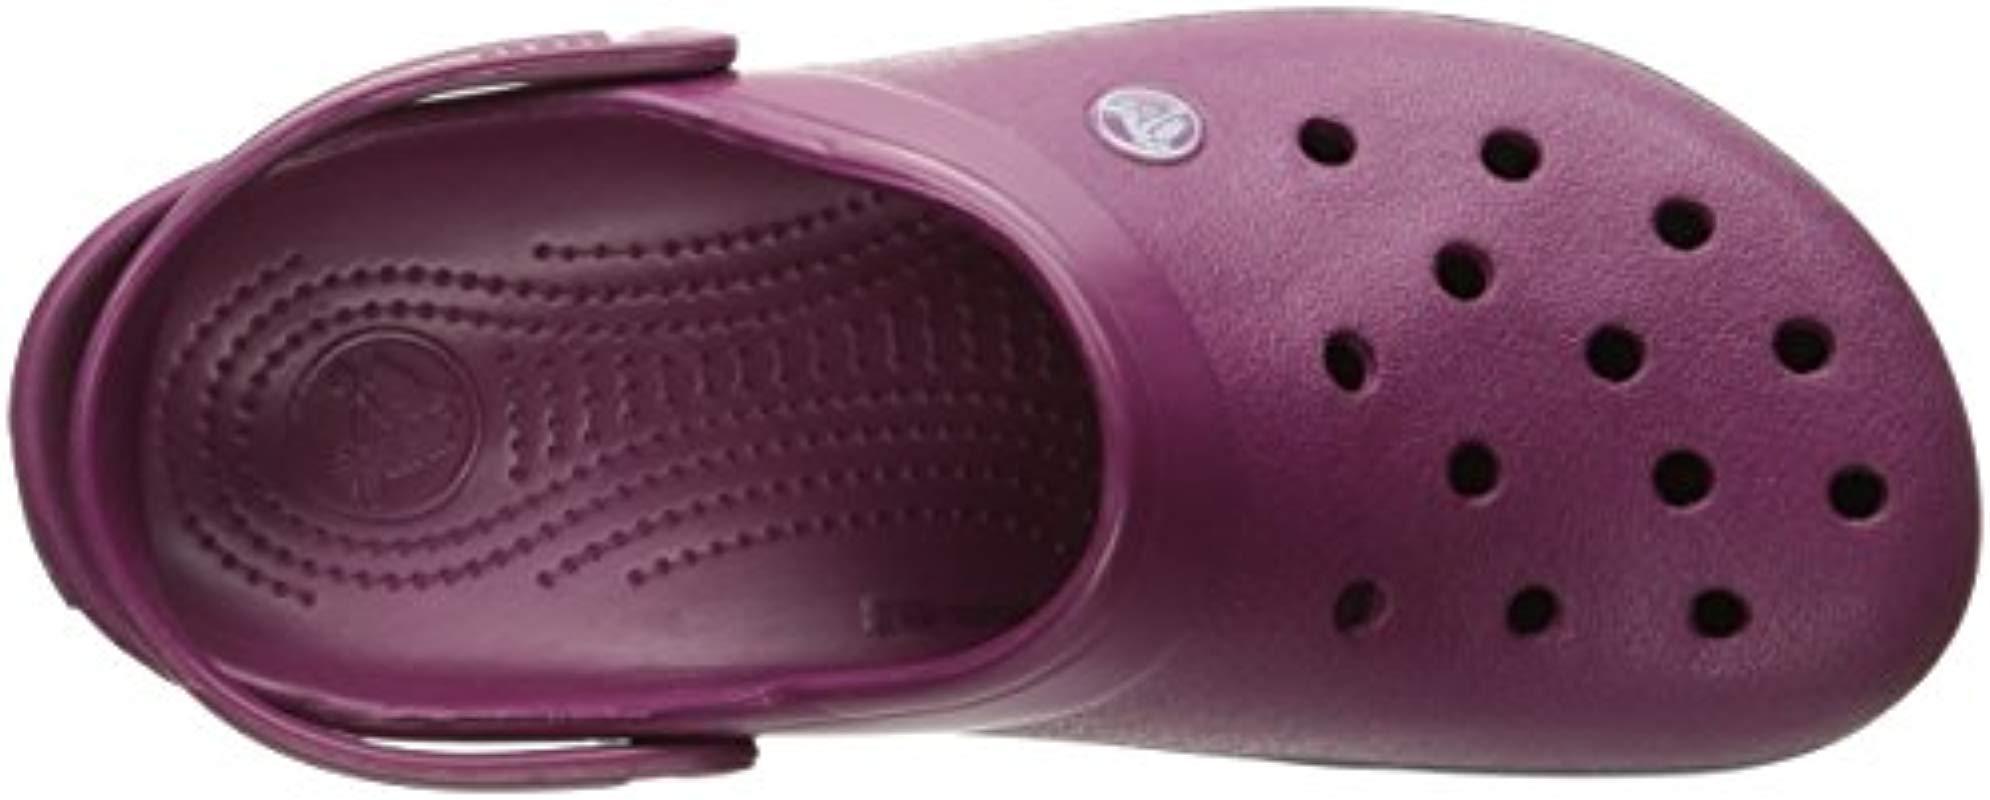 Crocs™ Unisex Adults' Crocband Clogs in Purple | Lyst